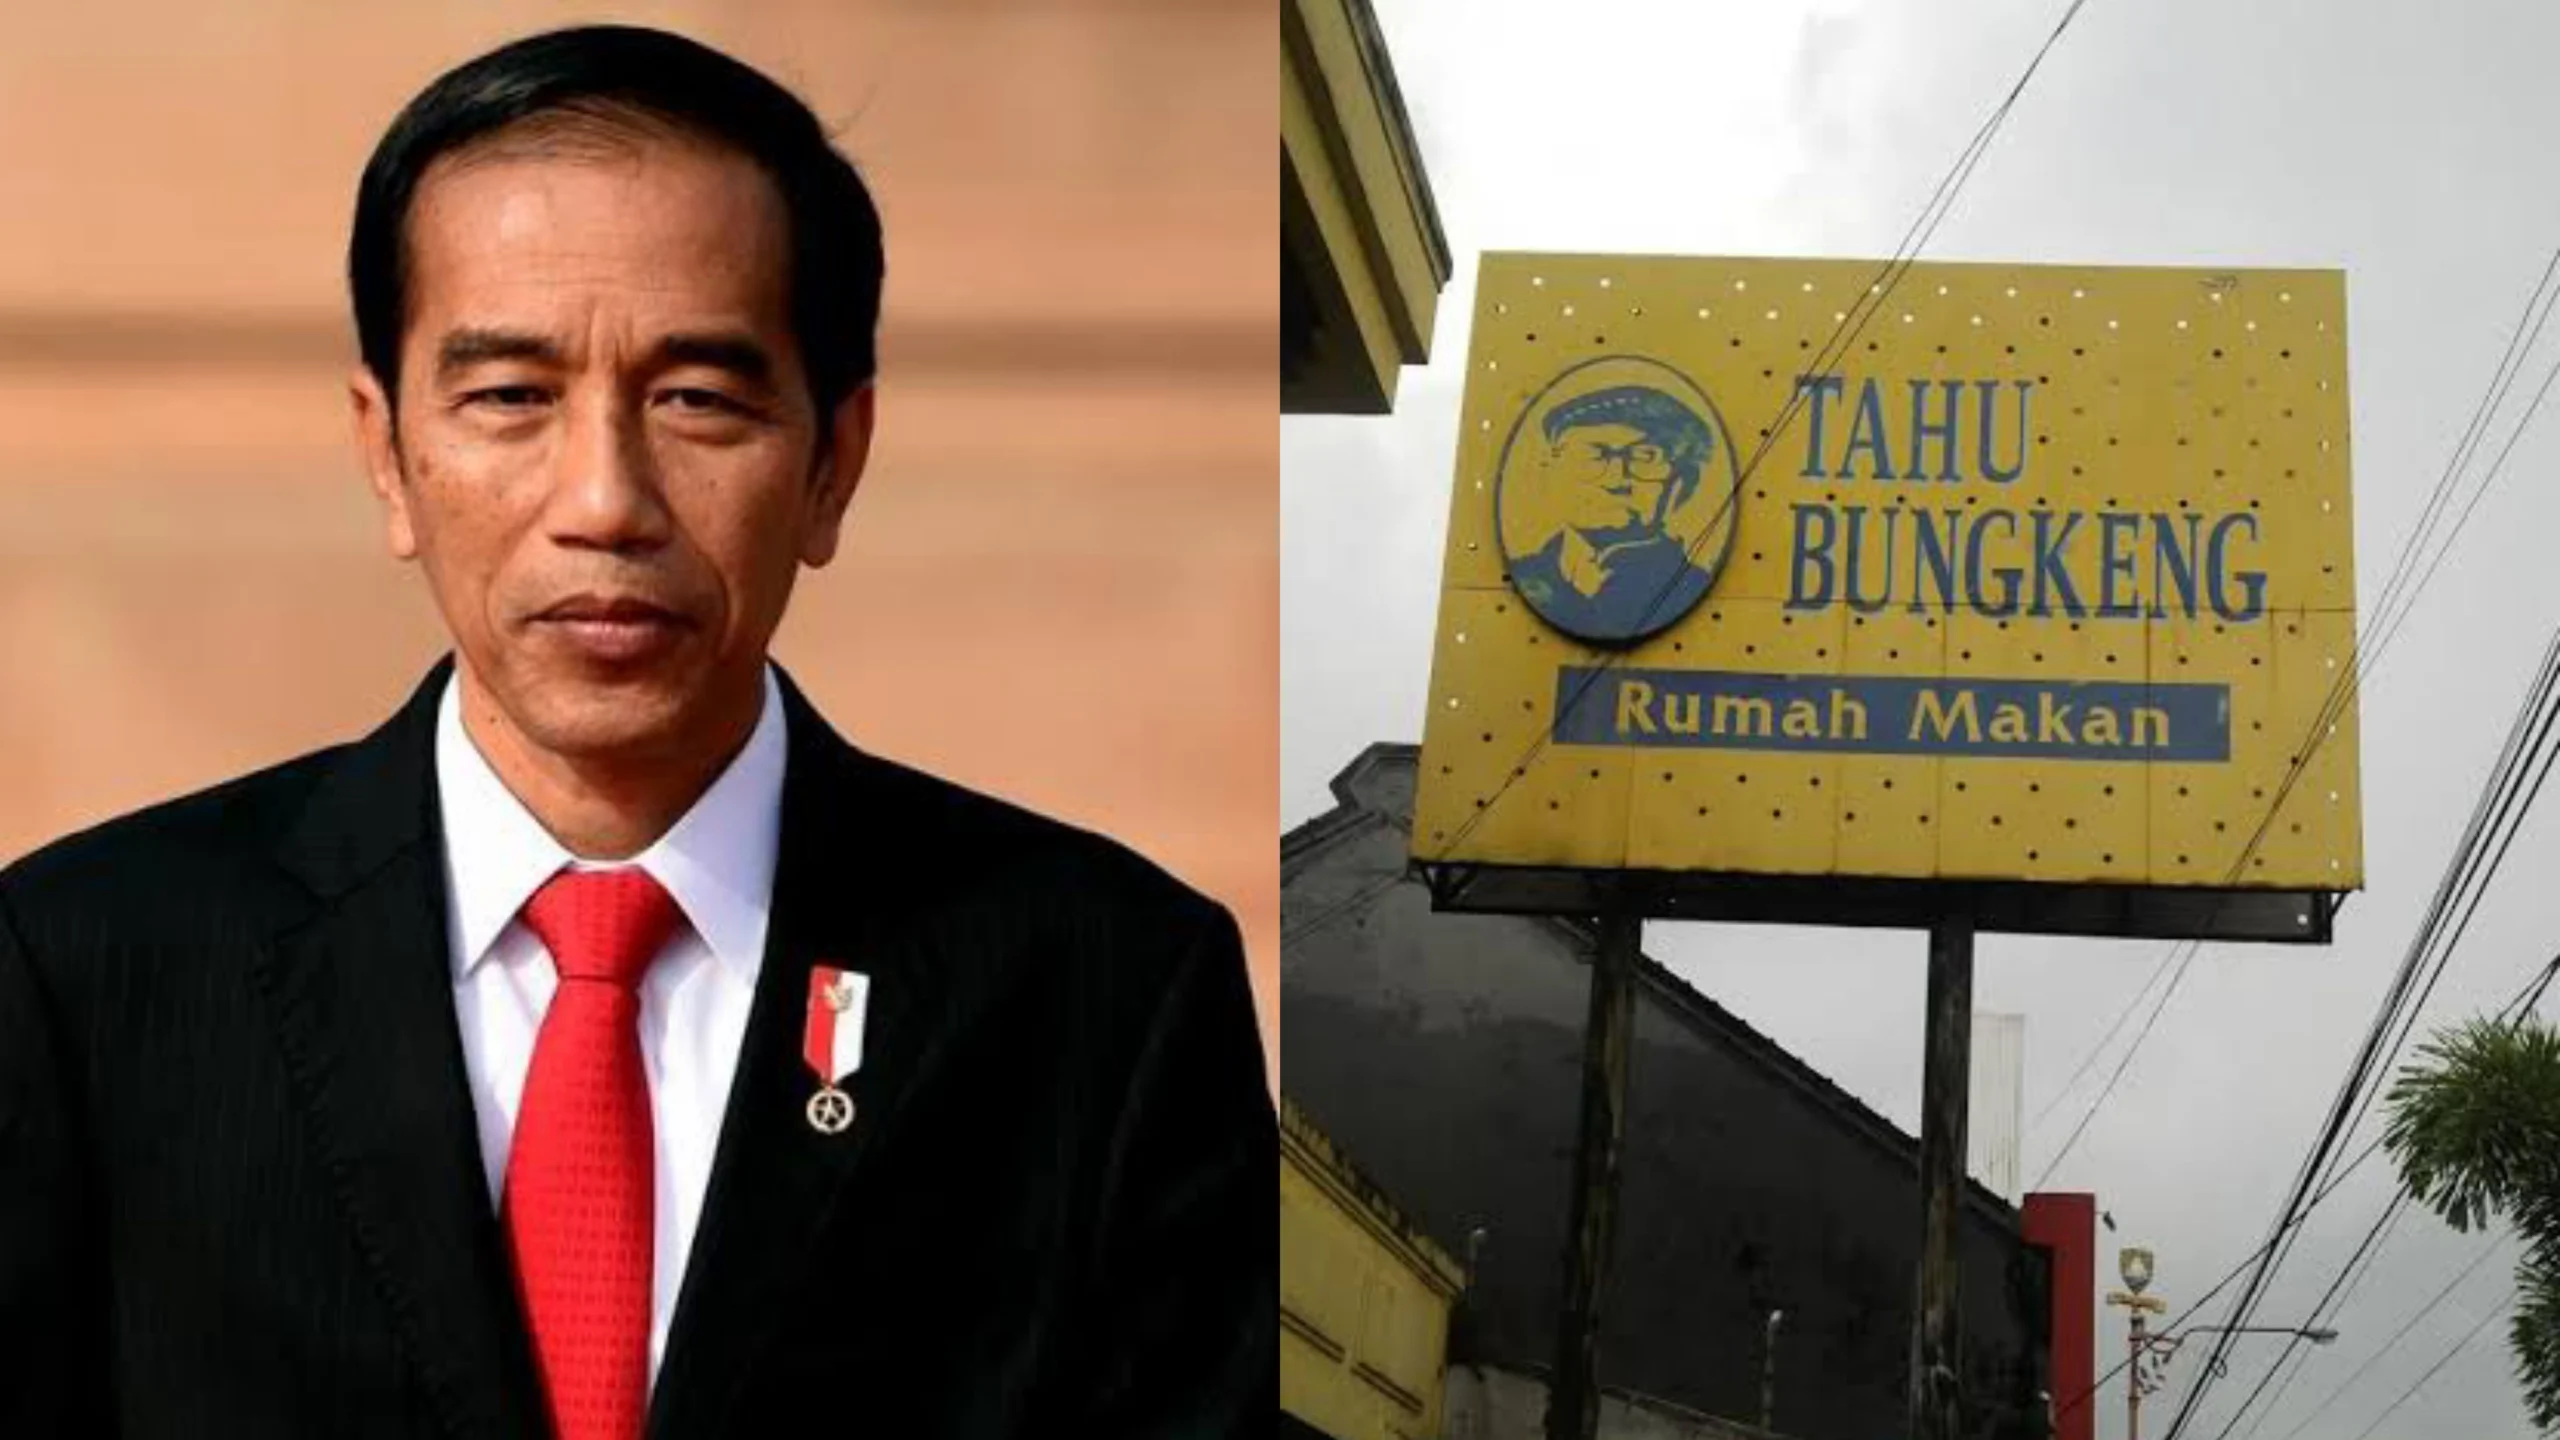 Jokowi Hari Ini Bakal Mampir ke RM Bungkeng Tahu Sumedang, Salah Satu Kuliner Legendaris!